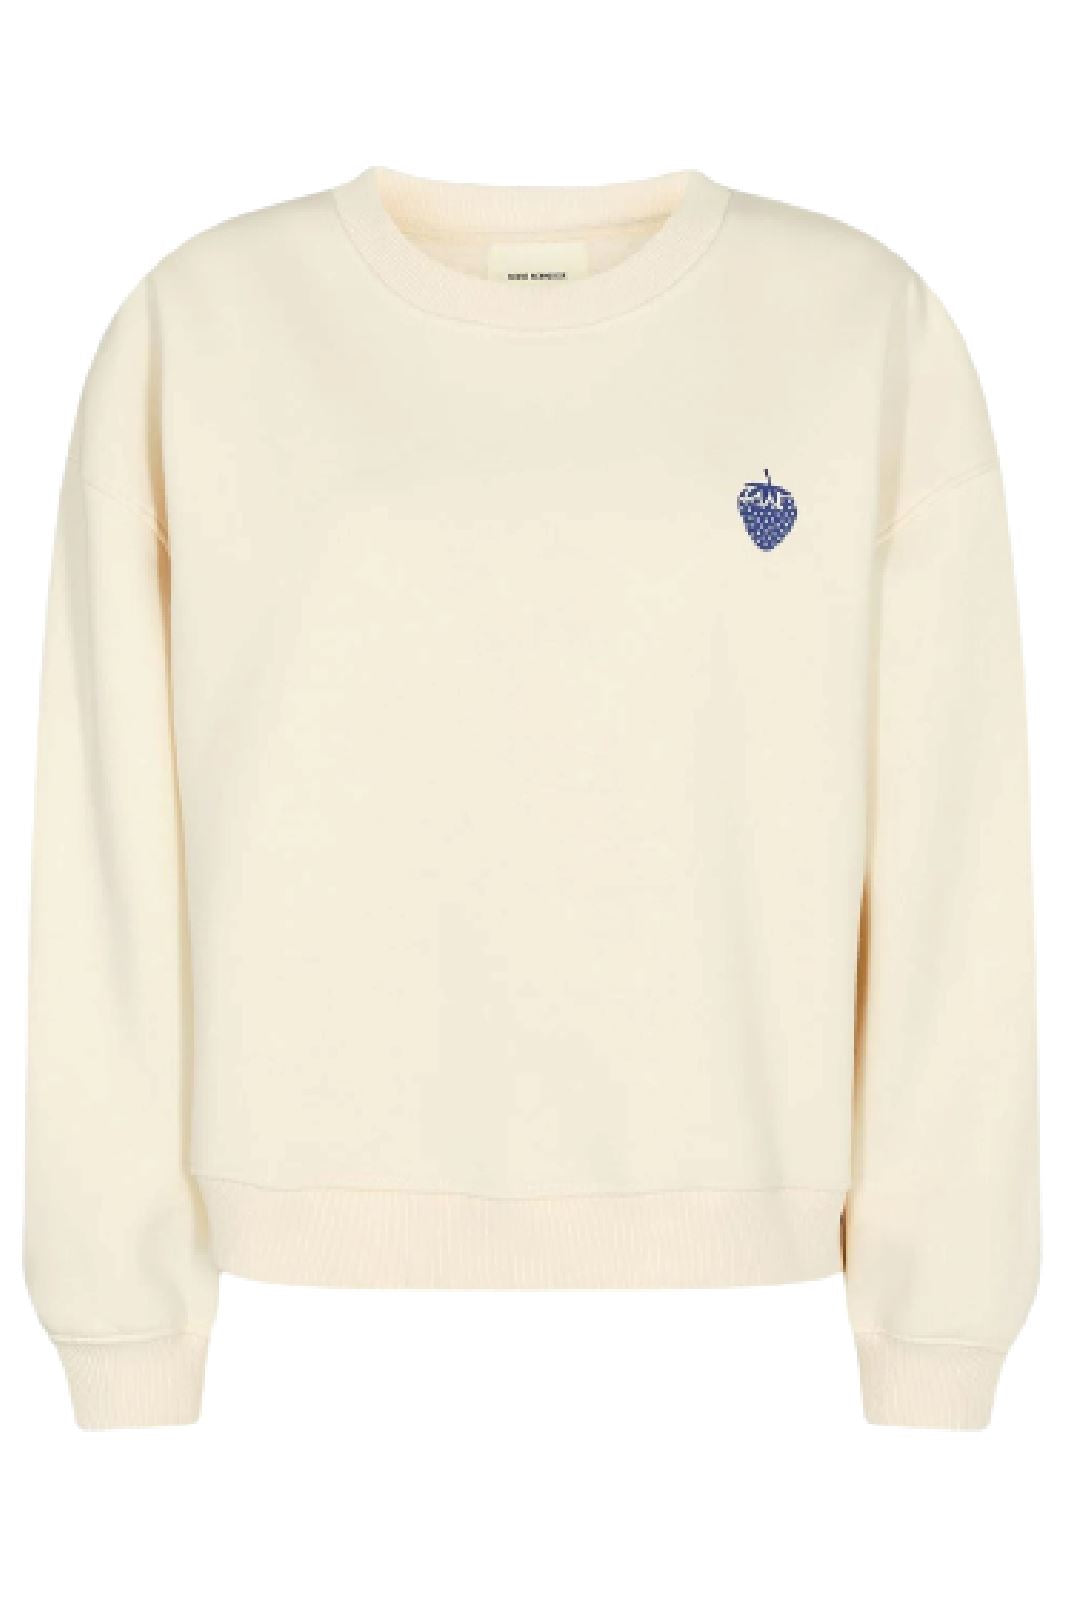 Sofie Schnoor - S231249 Sweatshirt - Off White Sweatshirts 